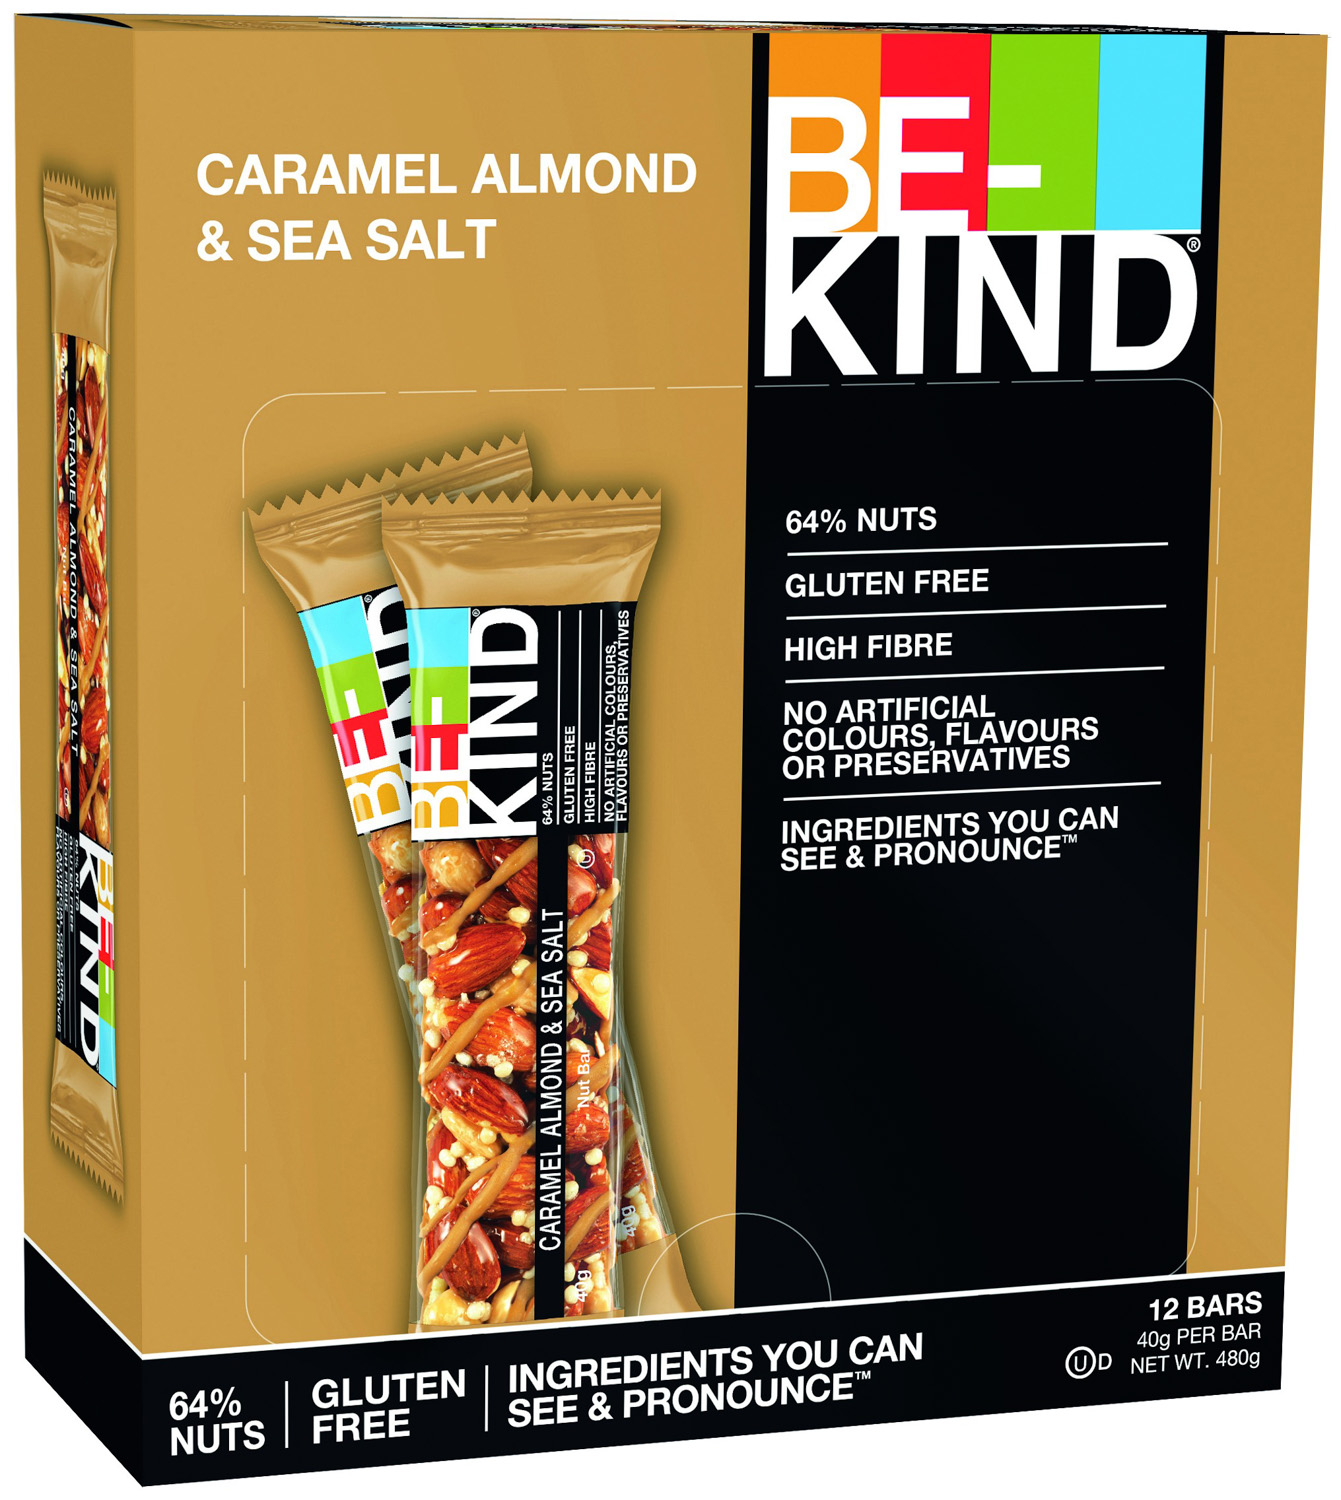 Be-Kind Caramel Almond & Sea Salt Riegel 40G